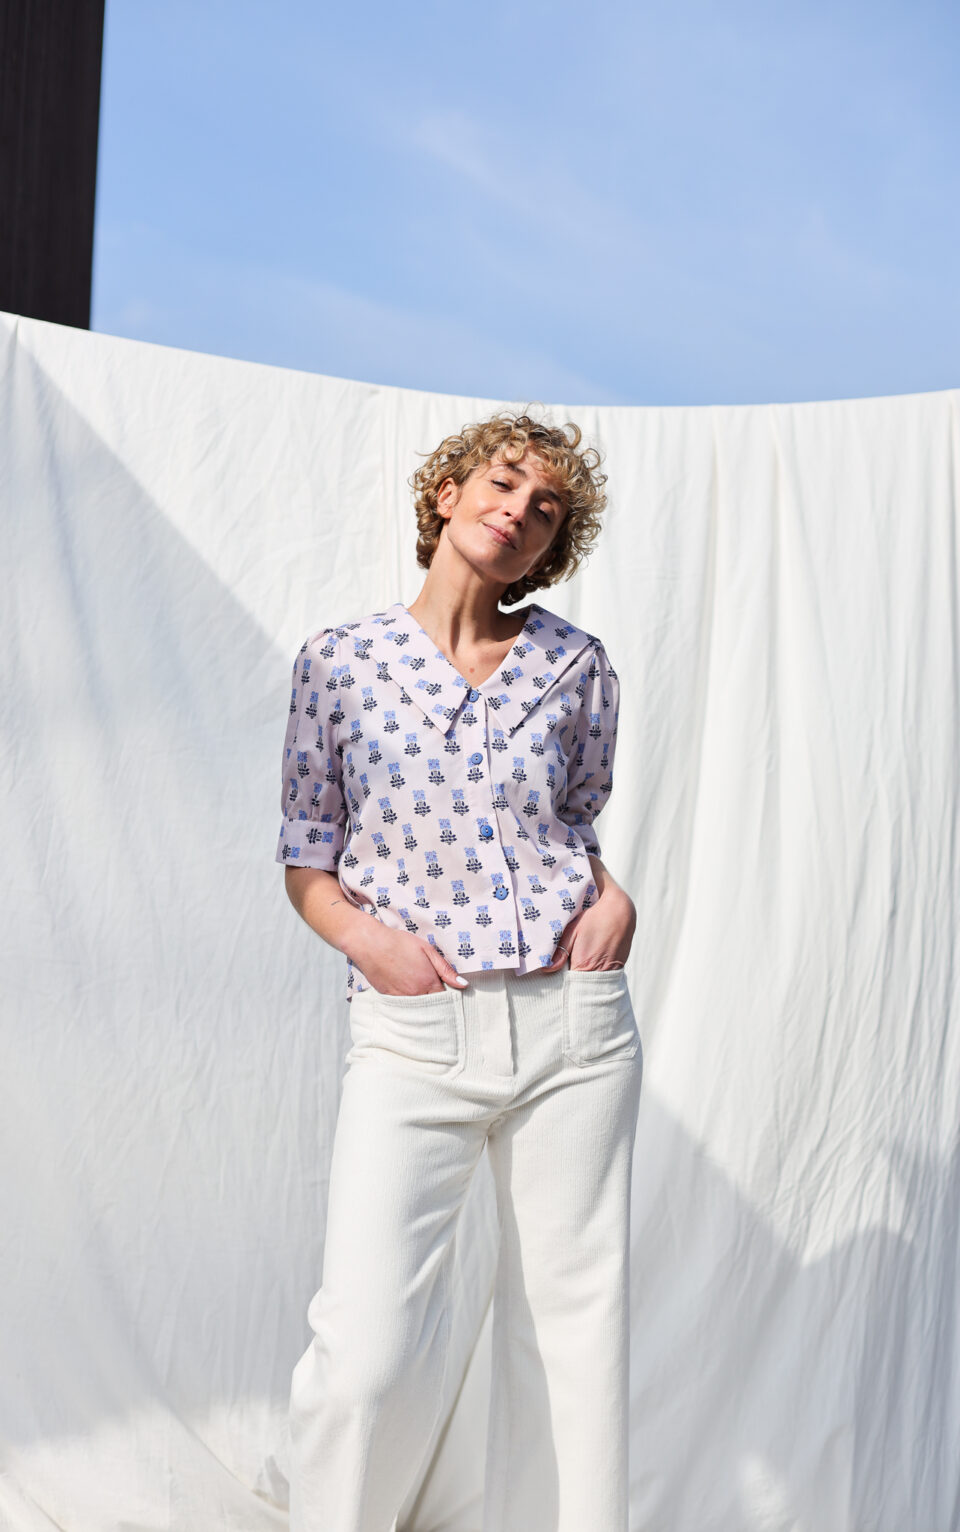 Sailor collar elegant silky cotton blouse HALI | Blouse | Sustainable clothing | OffOn clothing